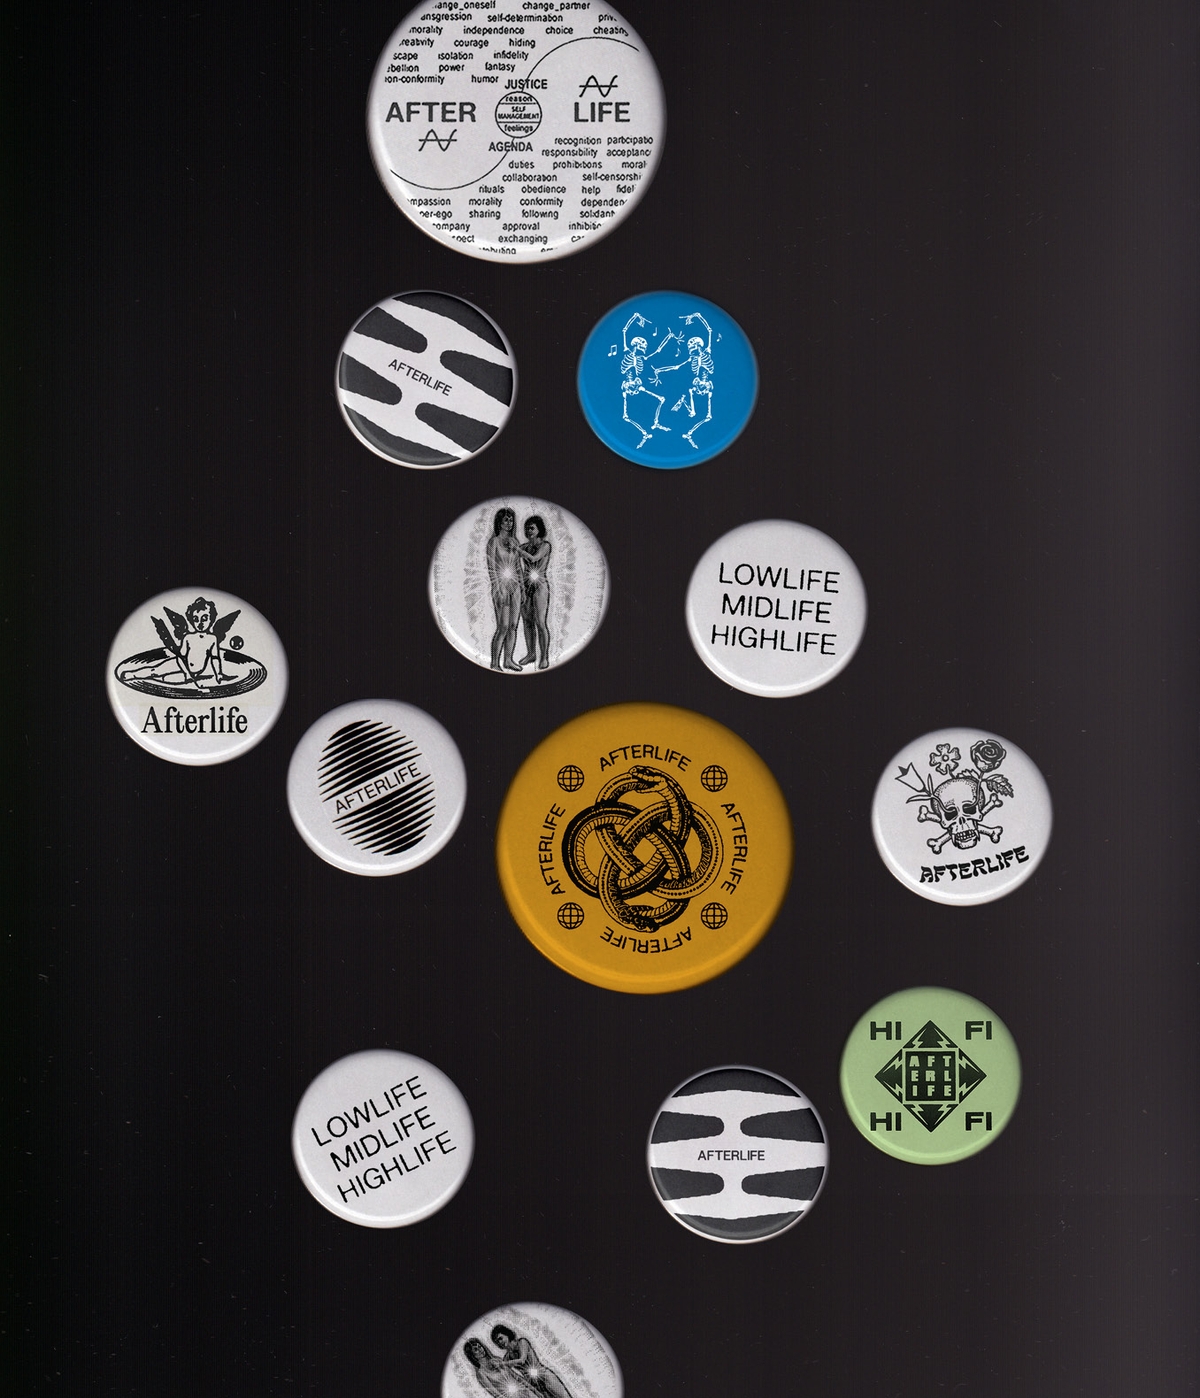 Afterlife - Brand Badges - Multiple Badges based on brand designs | Atollon - a design company